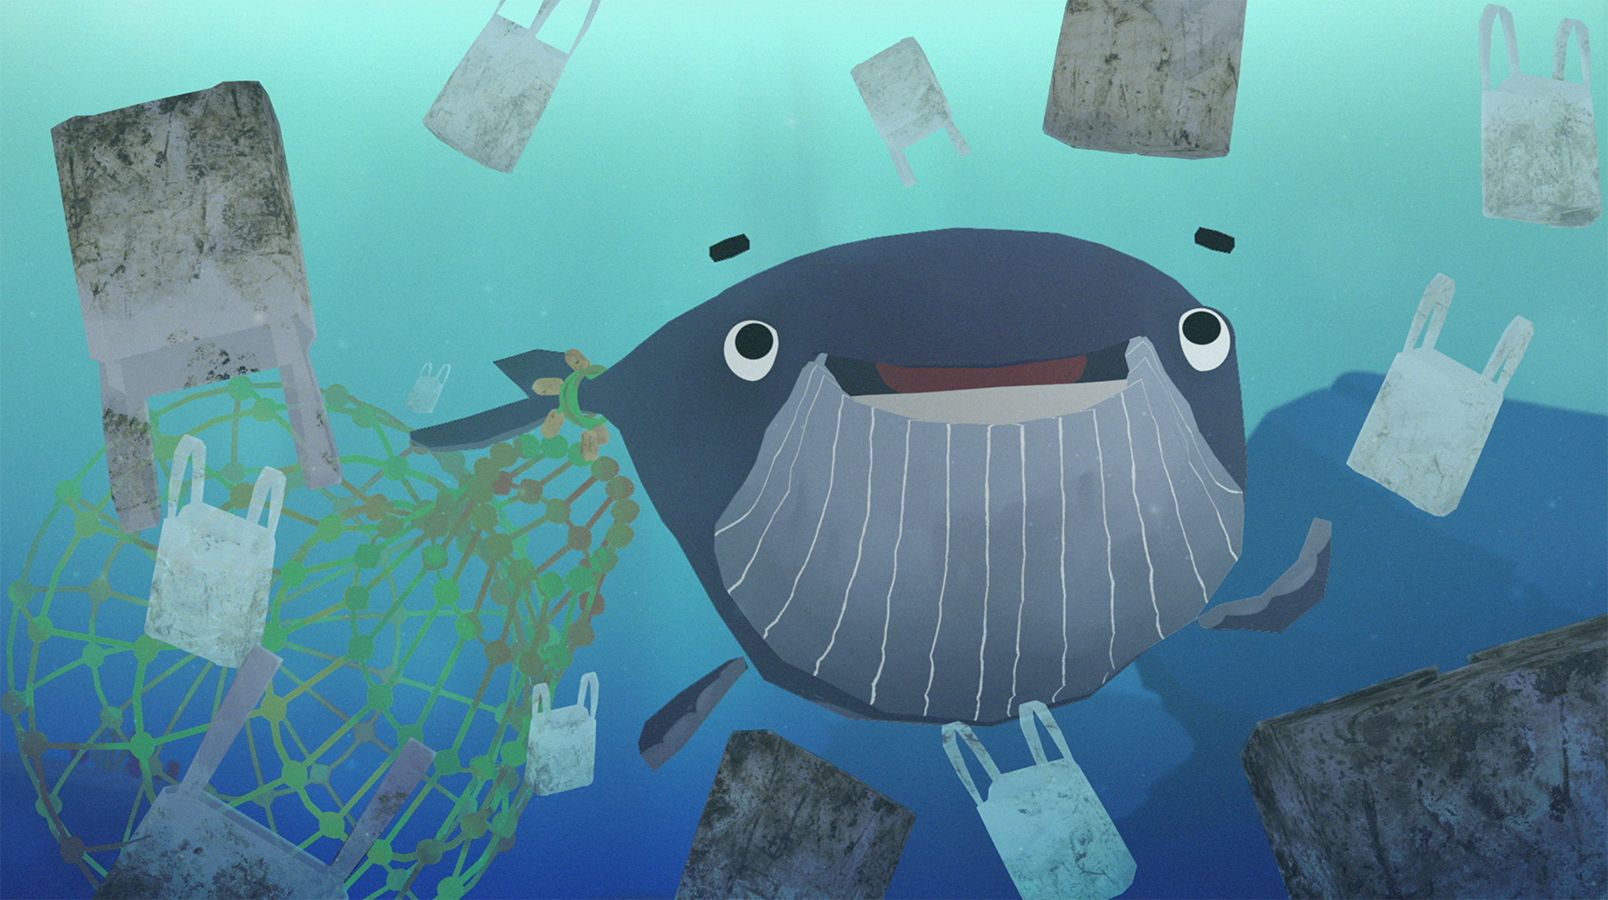 Plastic vs. whale: Animated film tells tale of hope | CNN